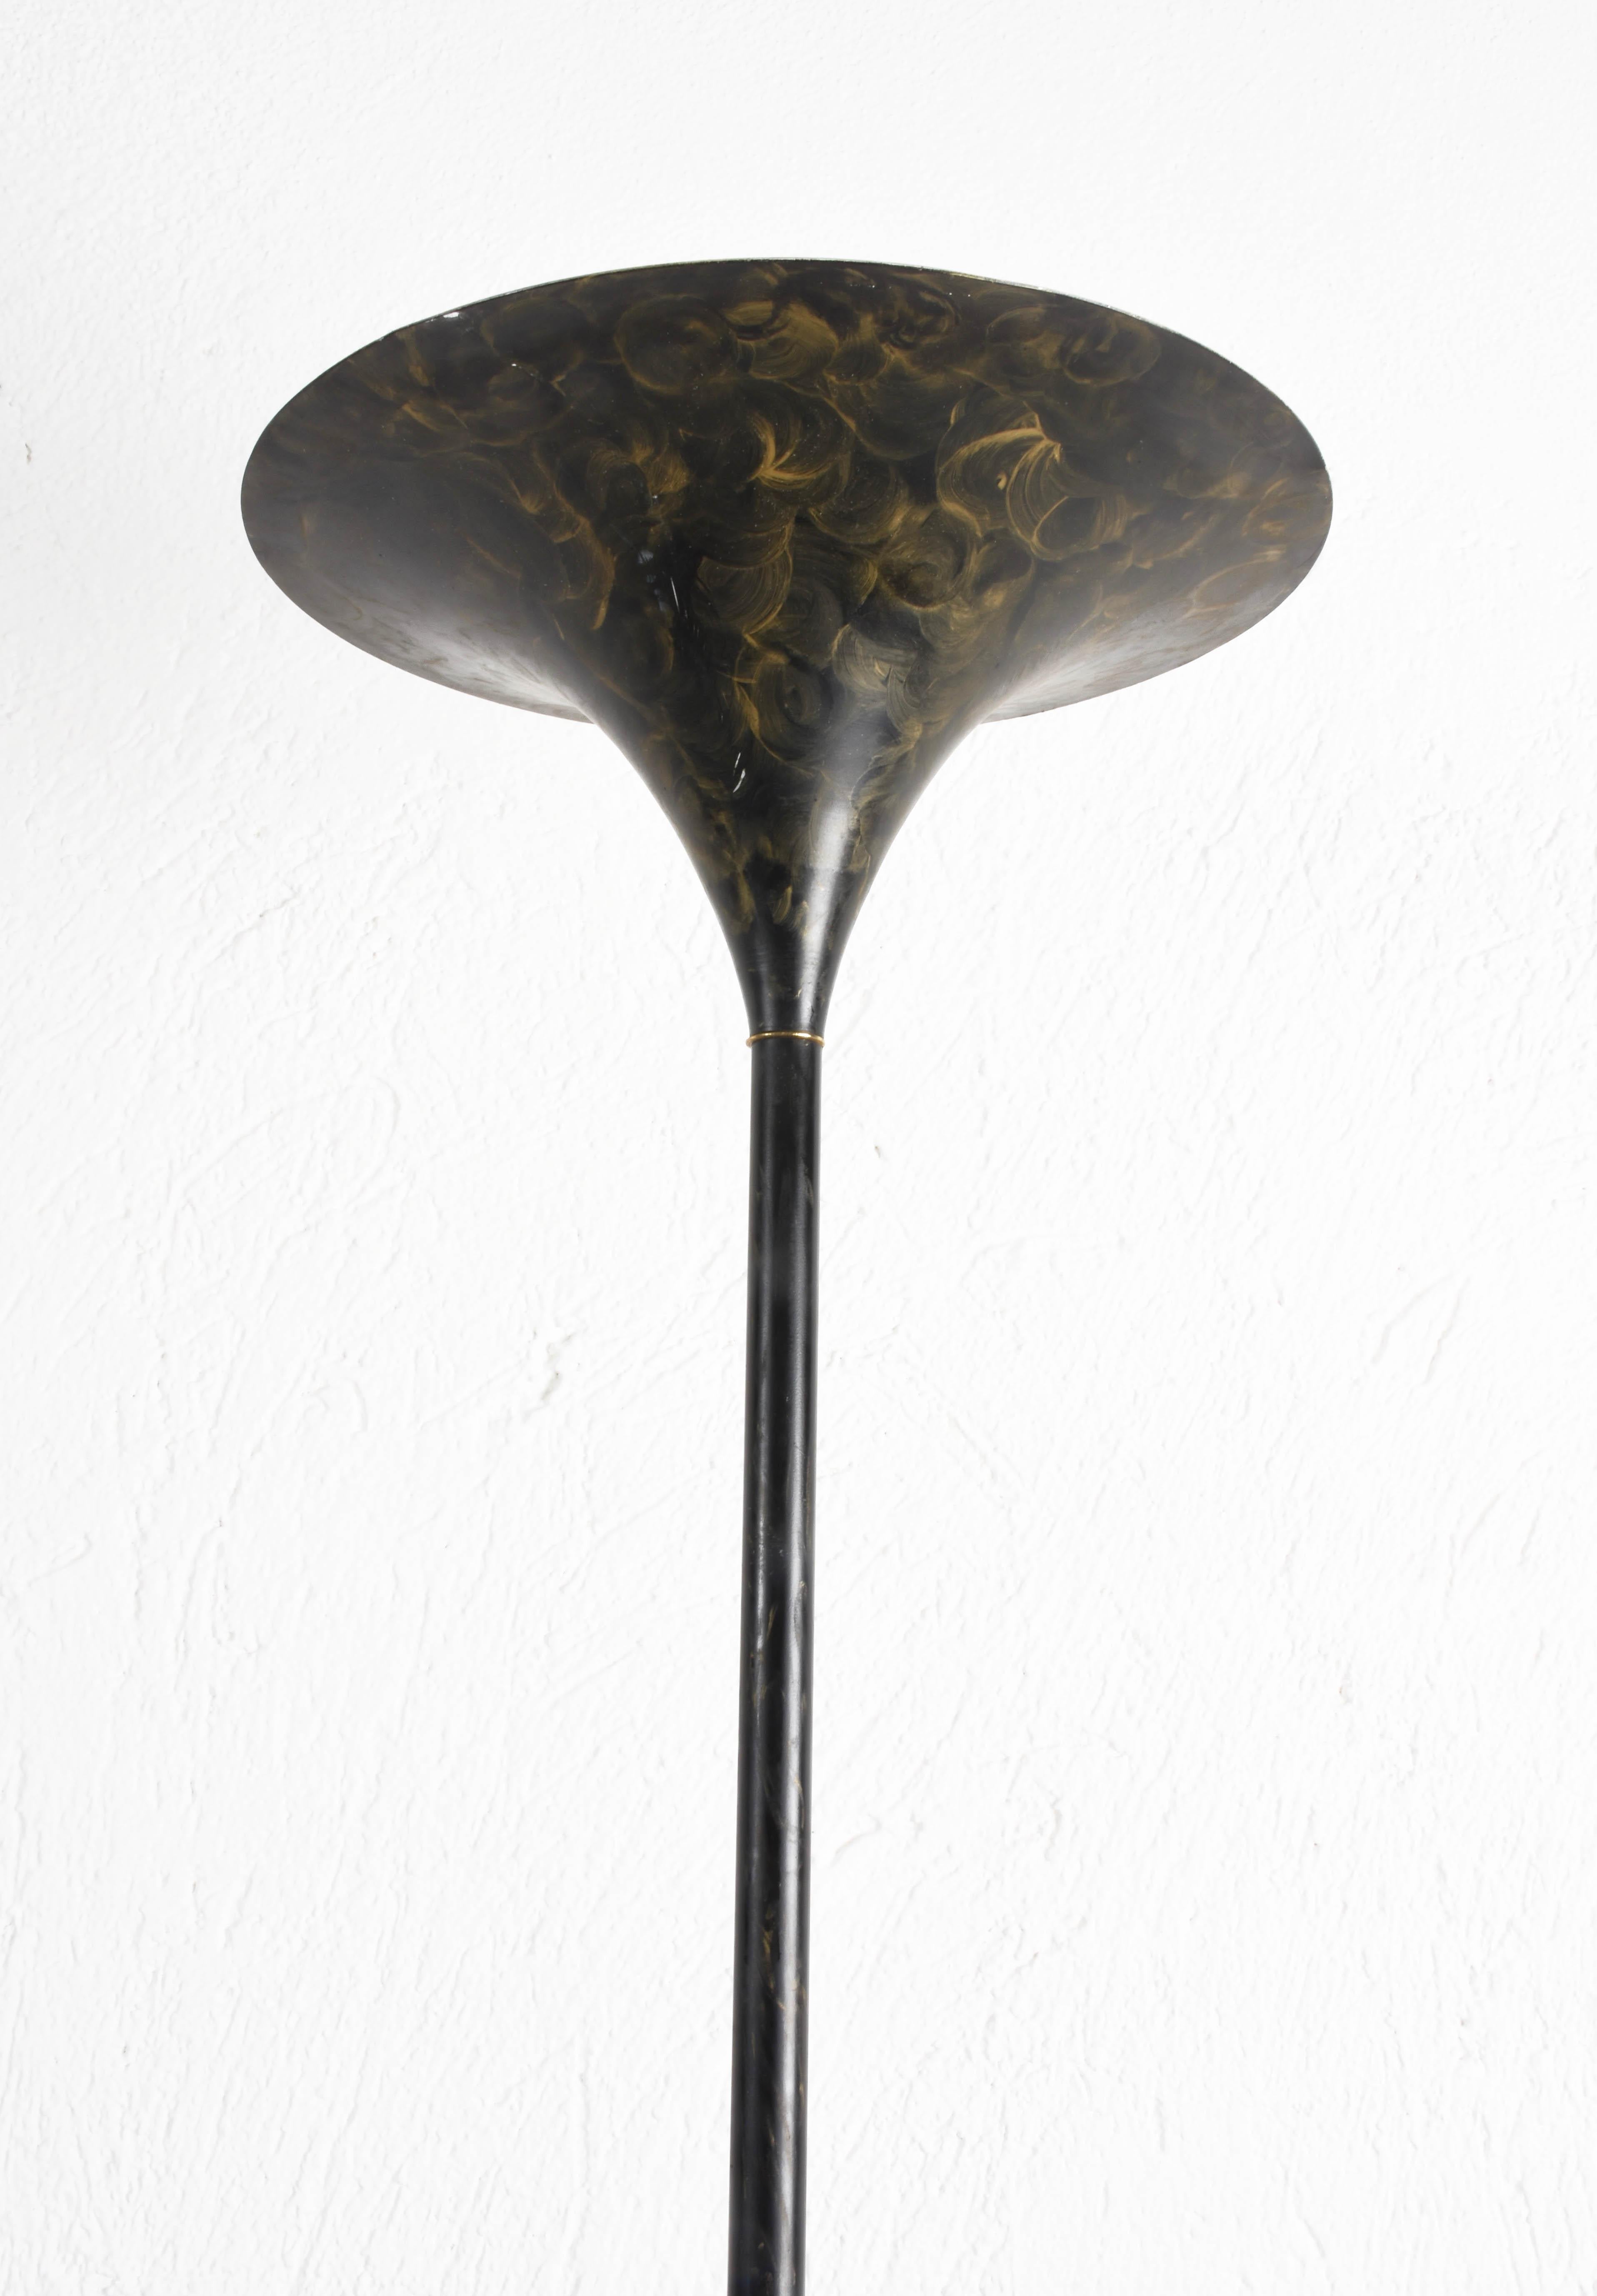 Midcentury Black Aluminum Tulip Italian Floor Lamp with Gold Finishes, 1970s For Sale 6